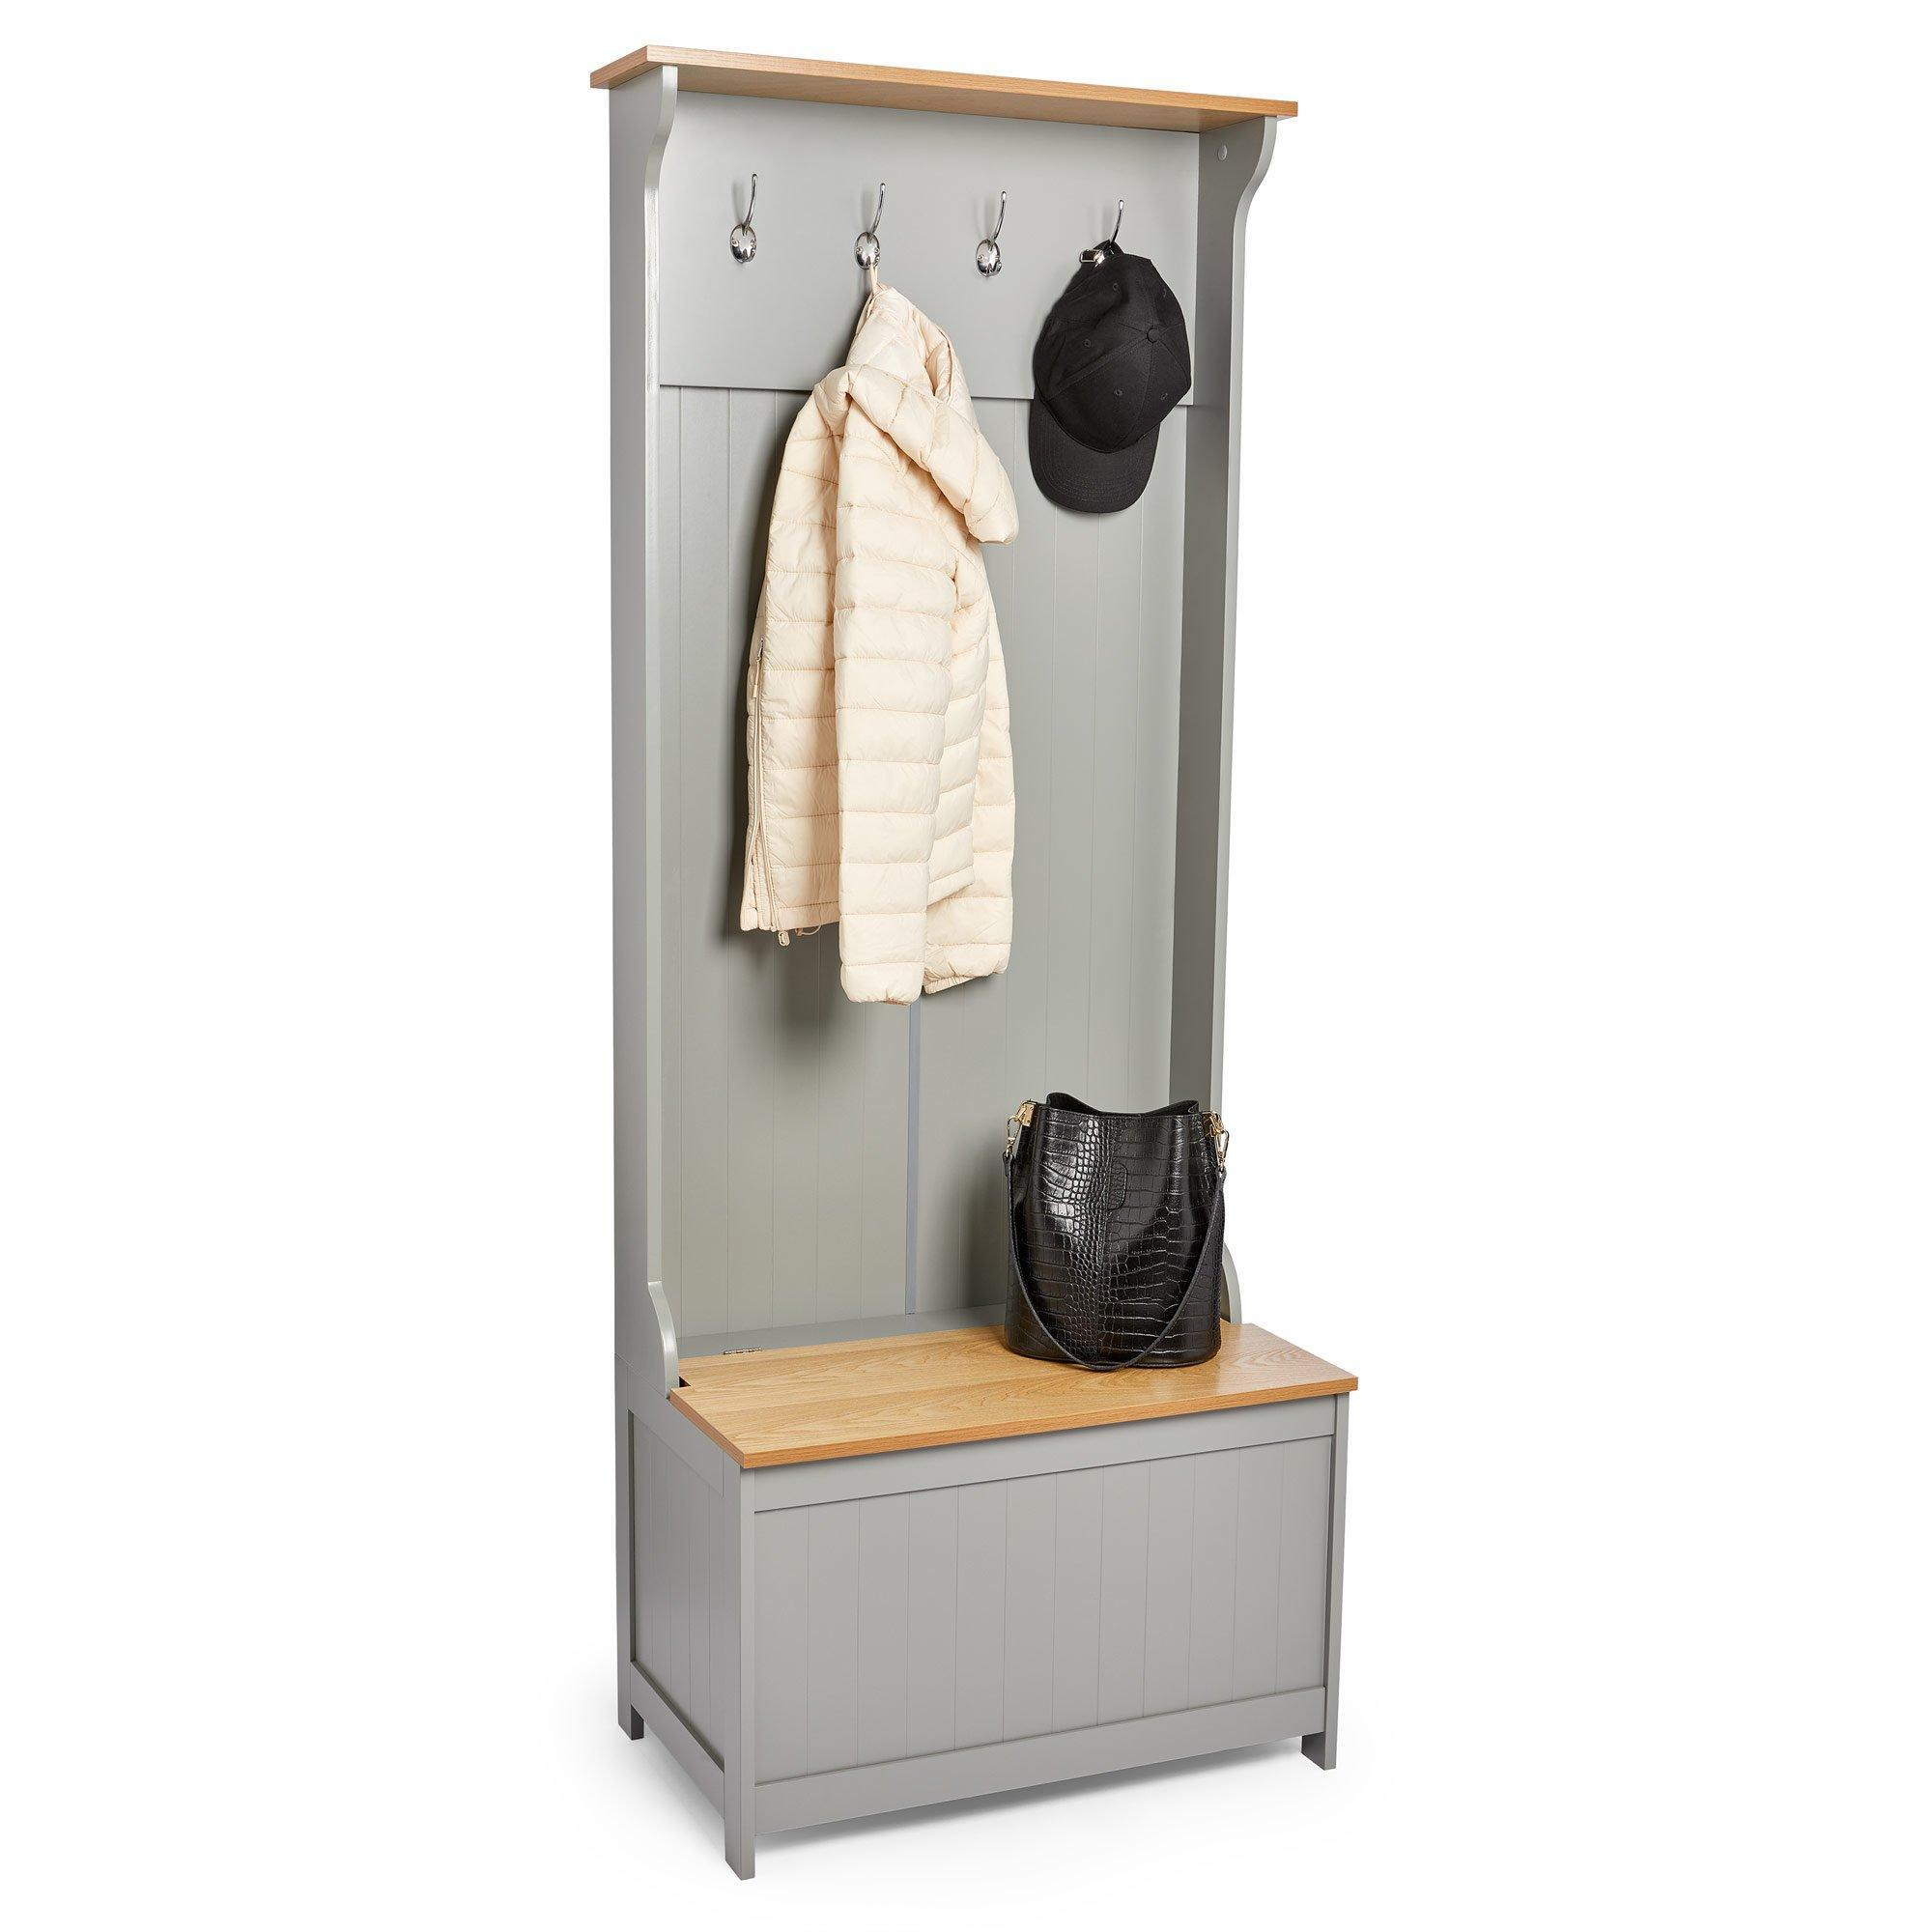 Hallway Storage Coat Rack Stand and Shoe Storage Bench - image 1